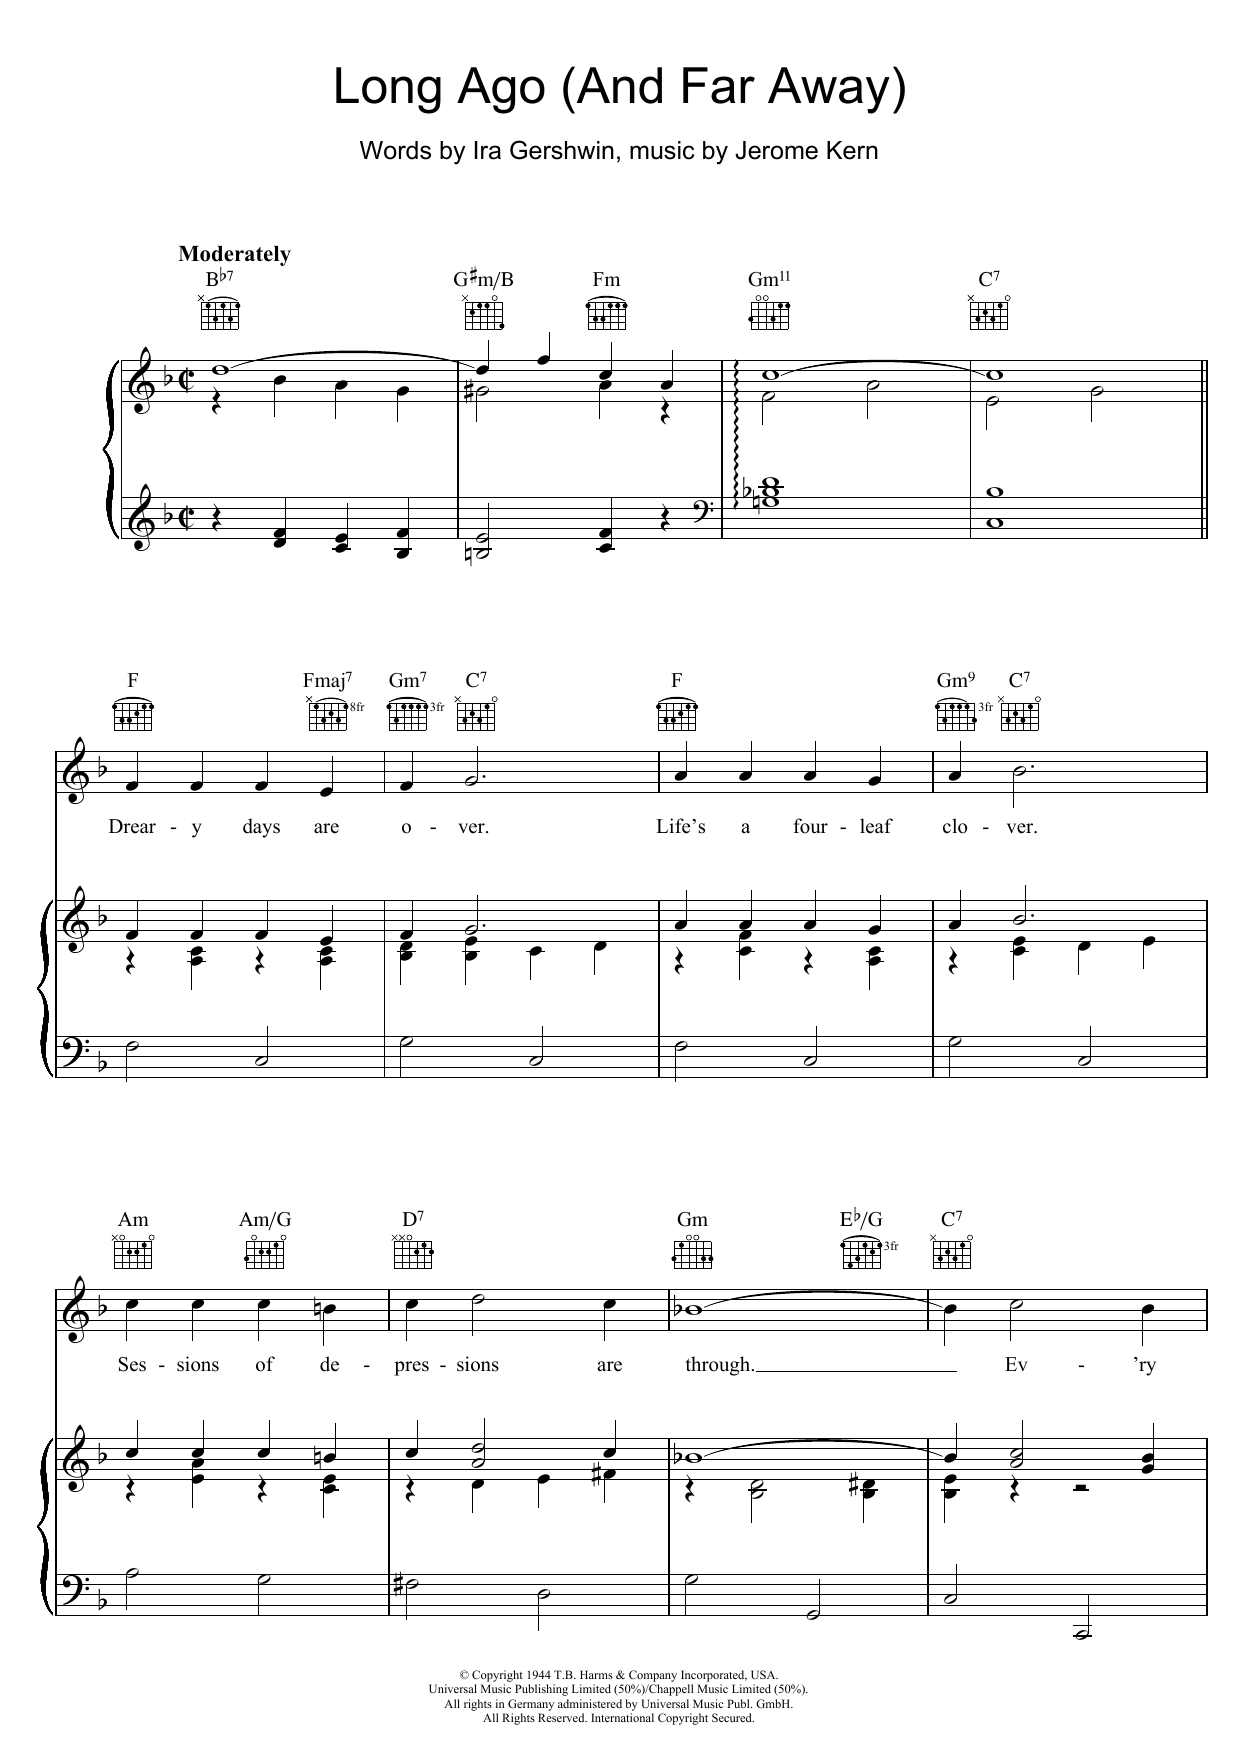 Ira Gershwin Long Ago (And Far Away) Sheet Music Notes & Chords for Melody Line, Lyrics & Chords - Download or Print PDF